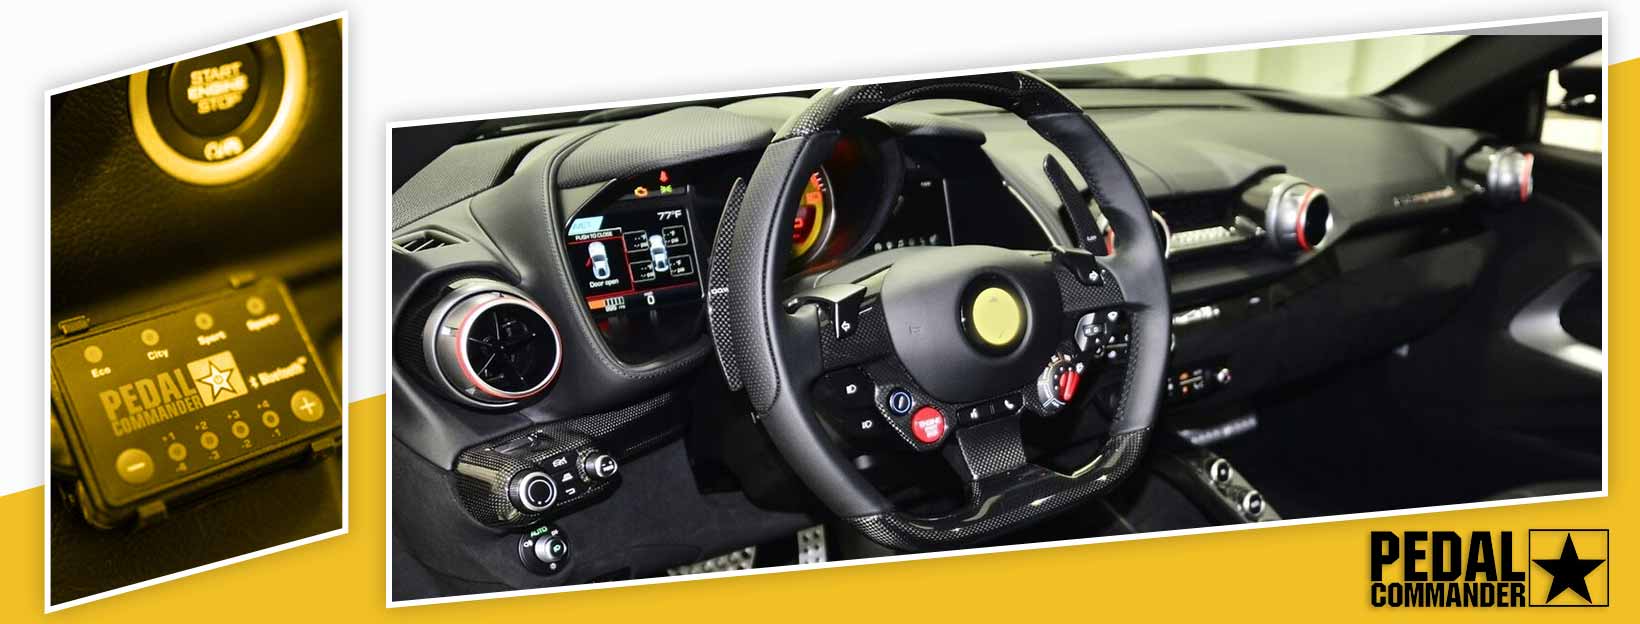 Pedal Commander for Ferrari 812 - interior